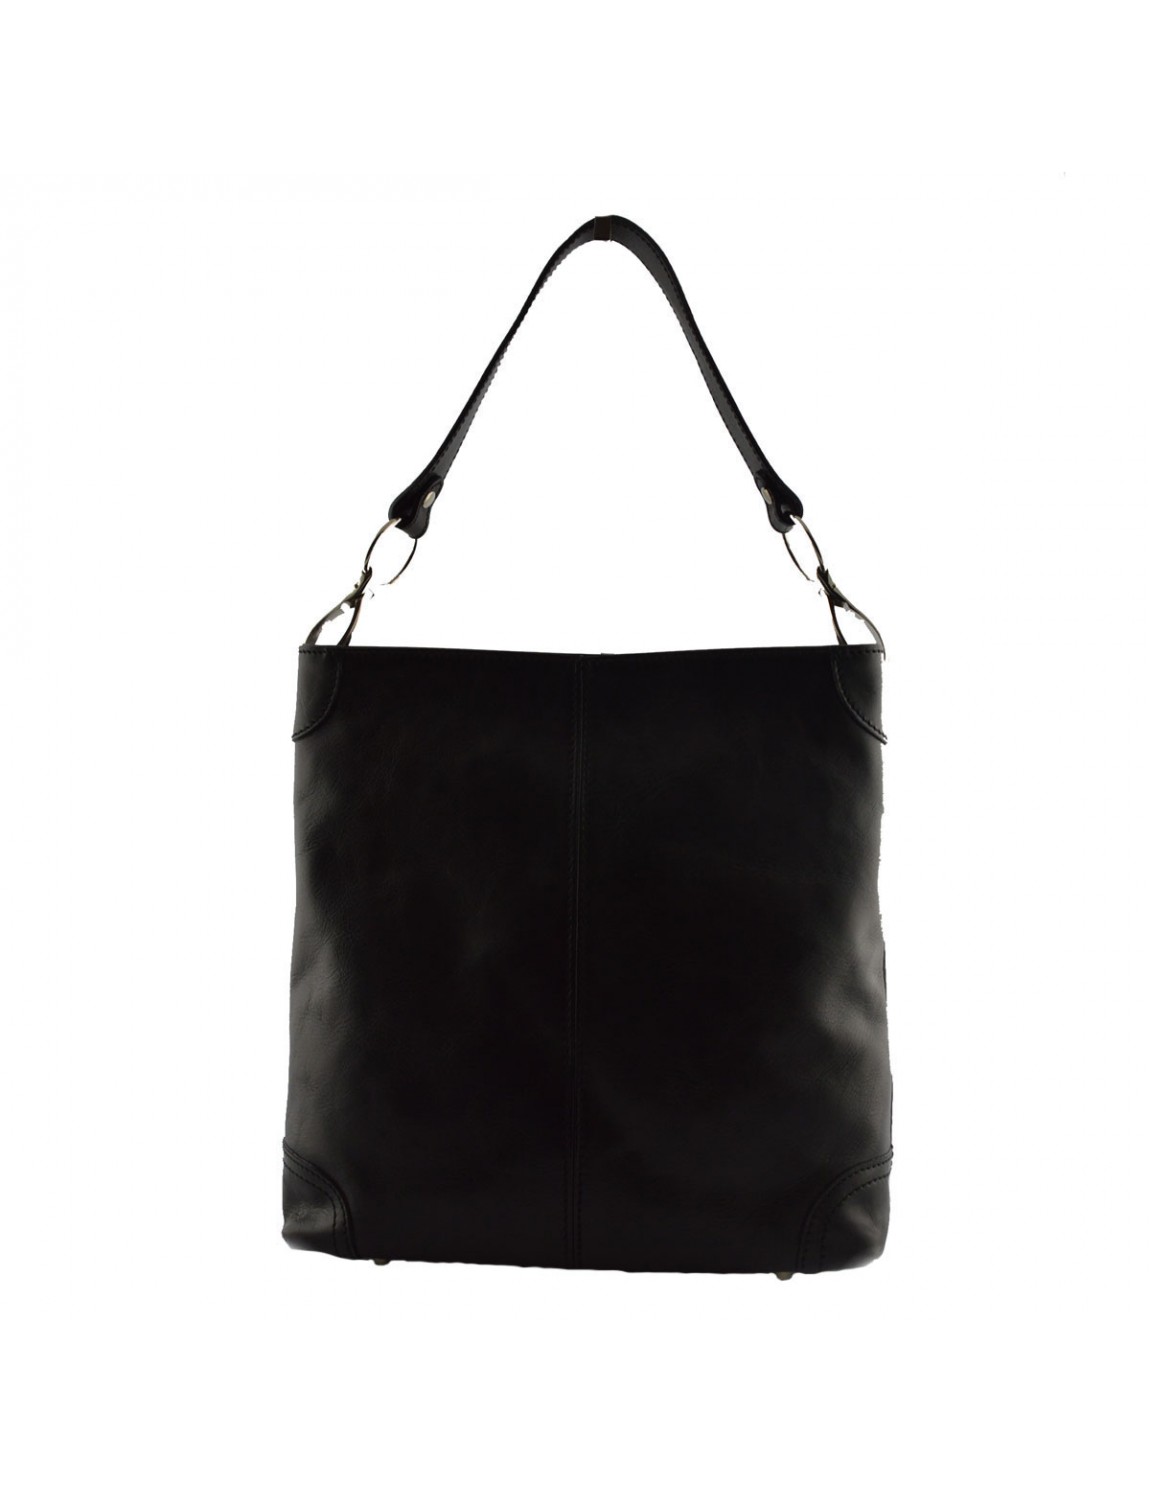 Woman Shoulder Leather Bag - Aita